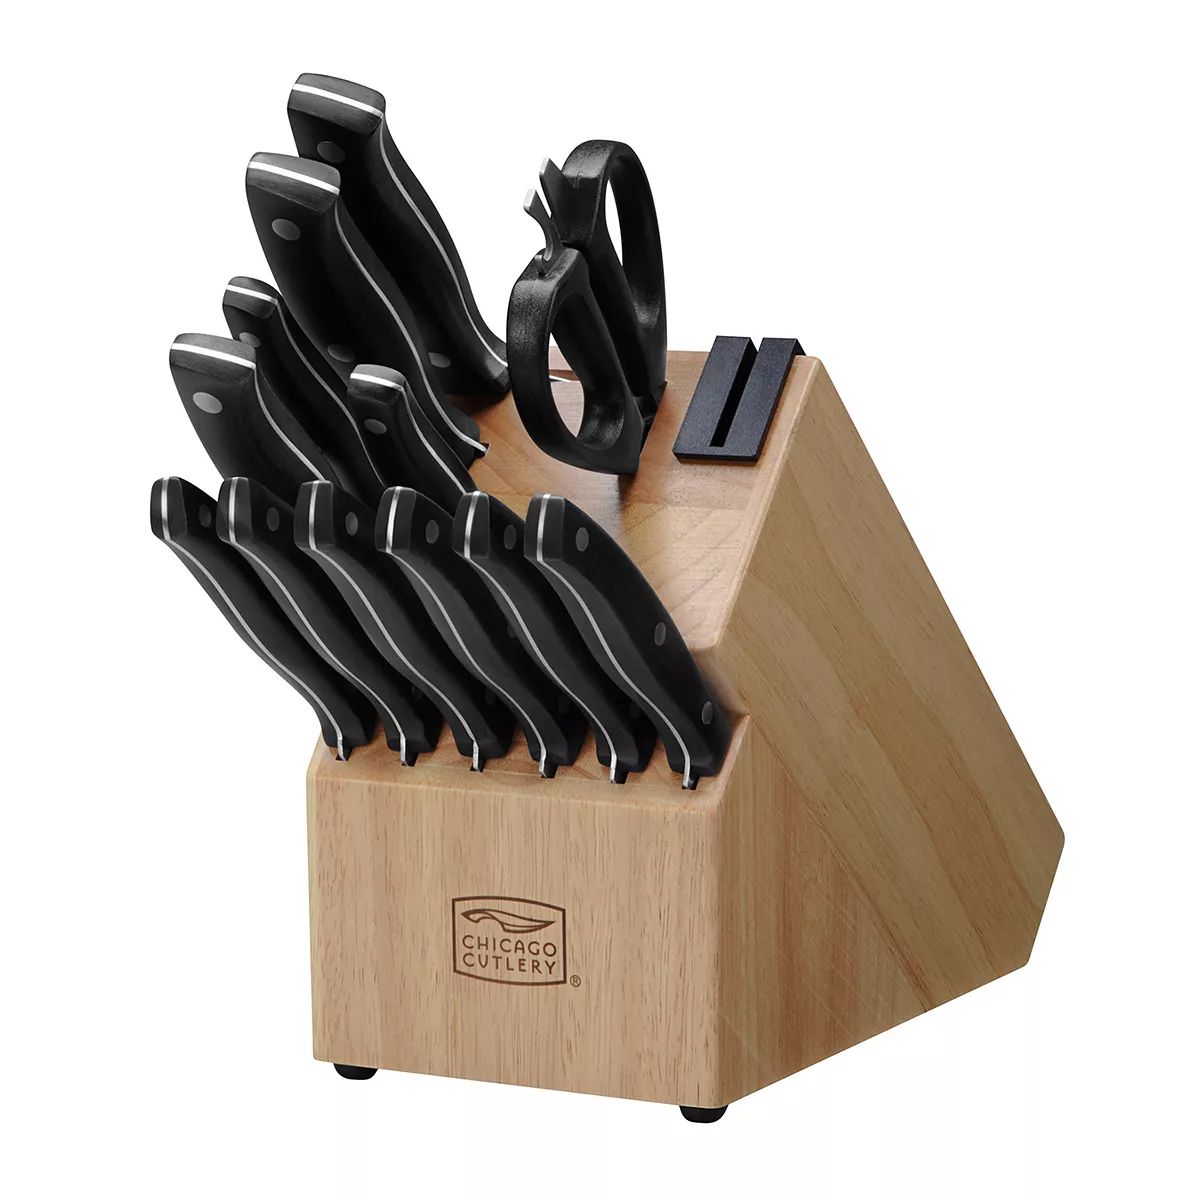 Chicago Cutlery Ellsworth 13-pc. Knife Block Set with Built-In Sharpener | Kohl's